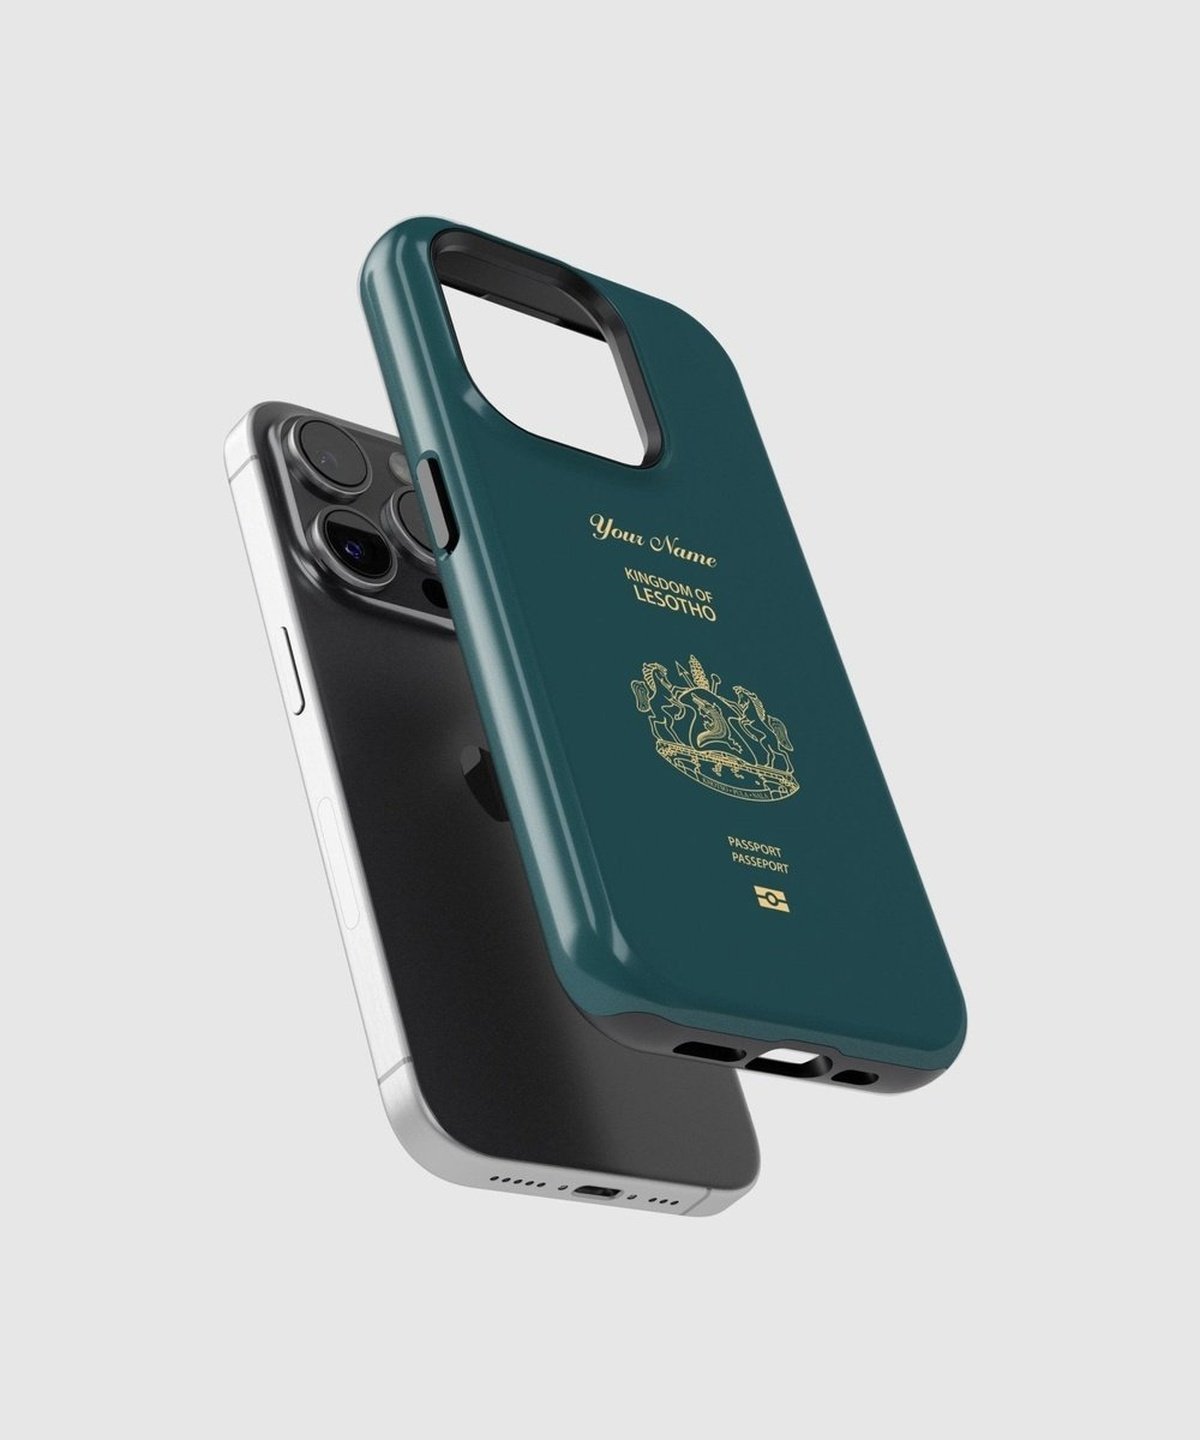 Lesotho Passport - iPhone Case